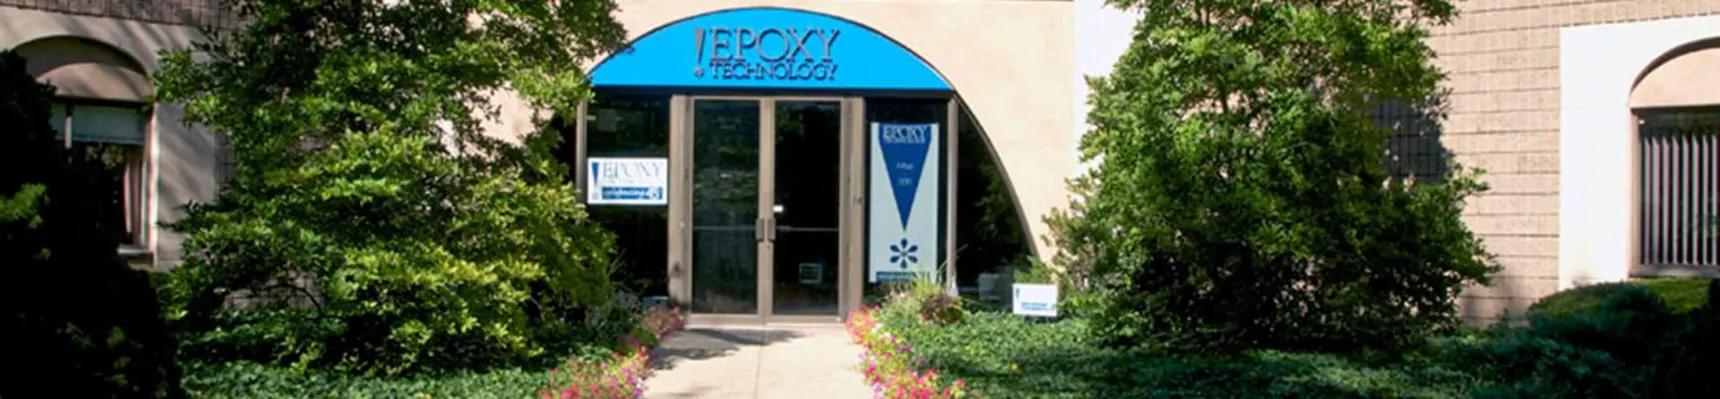 Epoxy Technology Inc. banner